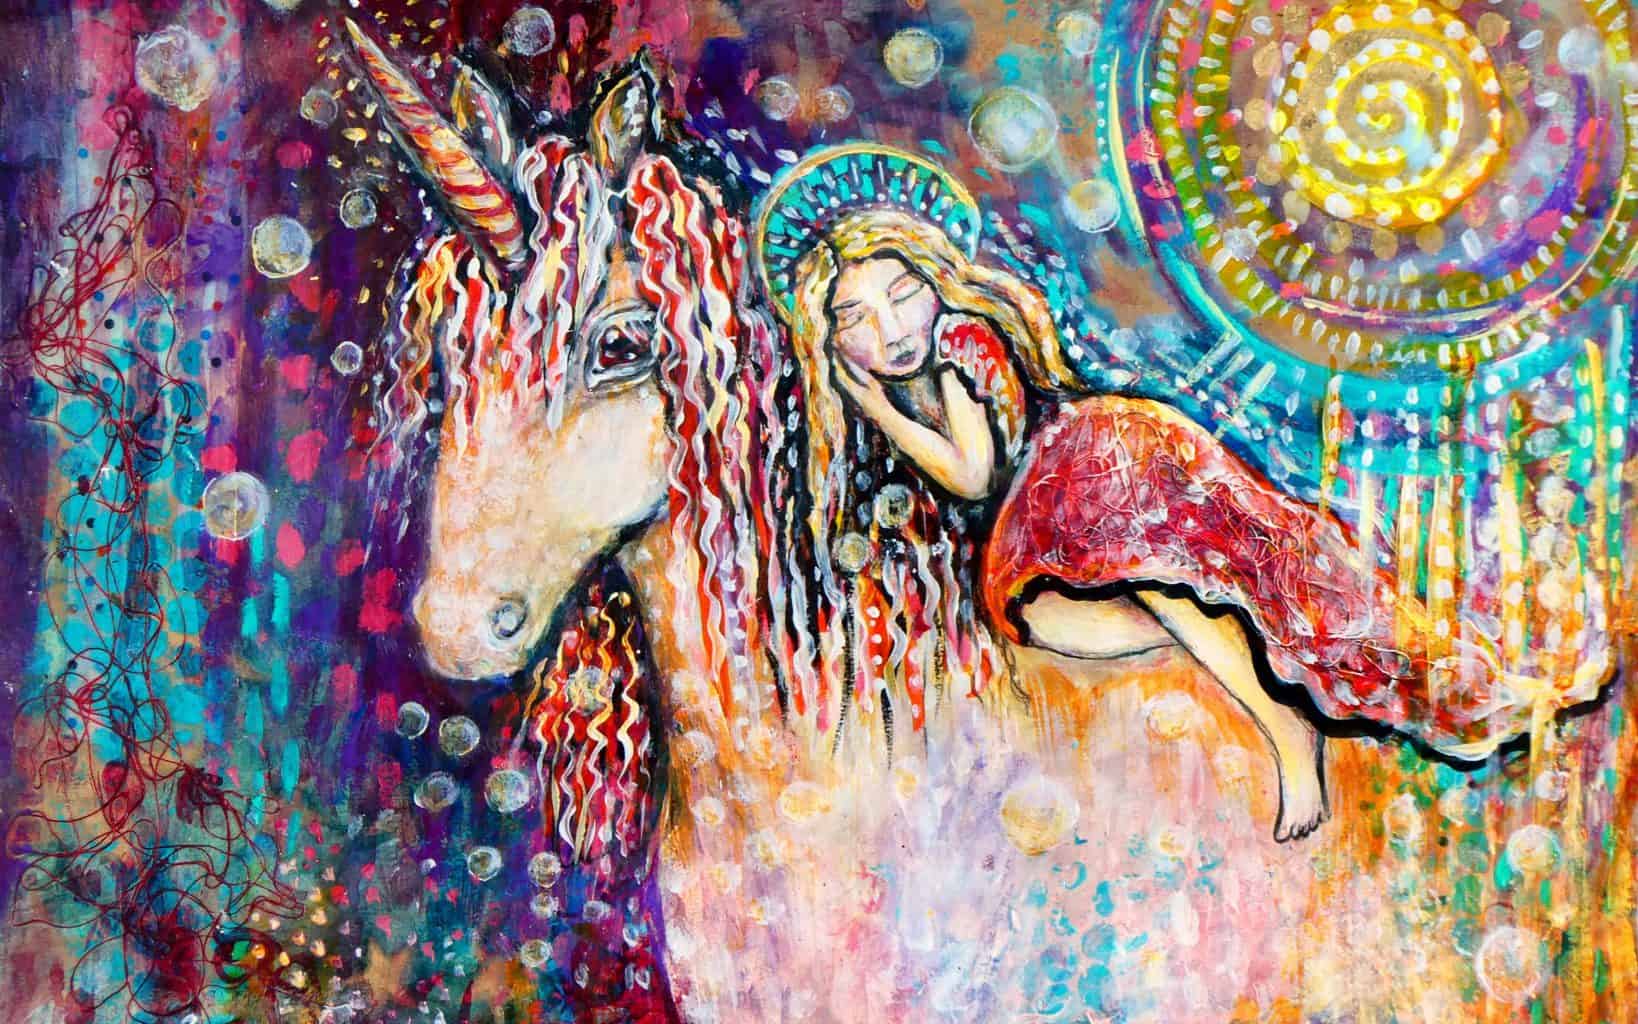 Rainbow unicorn dreaming enchanted art